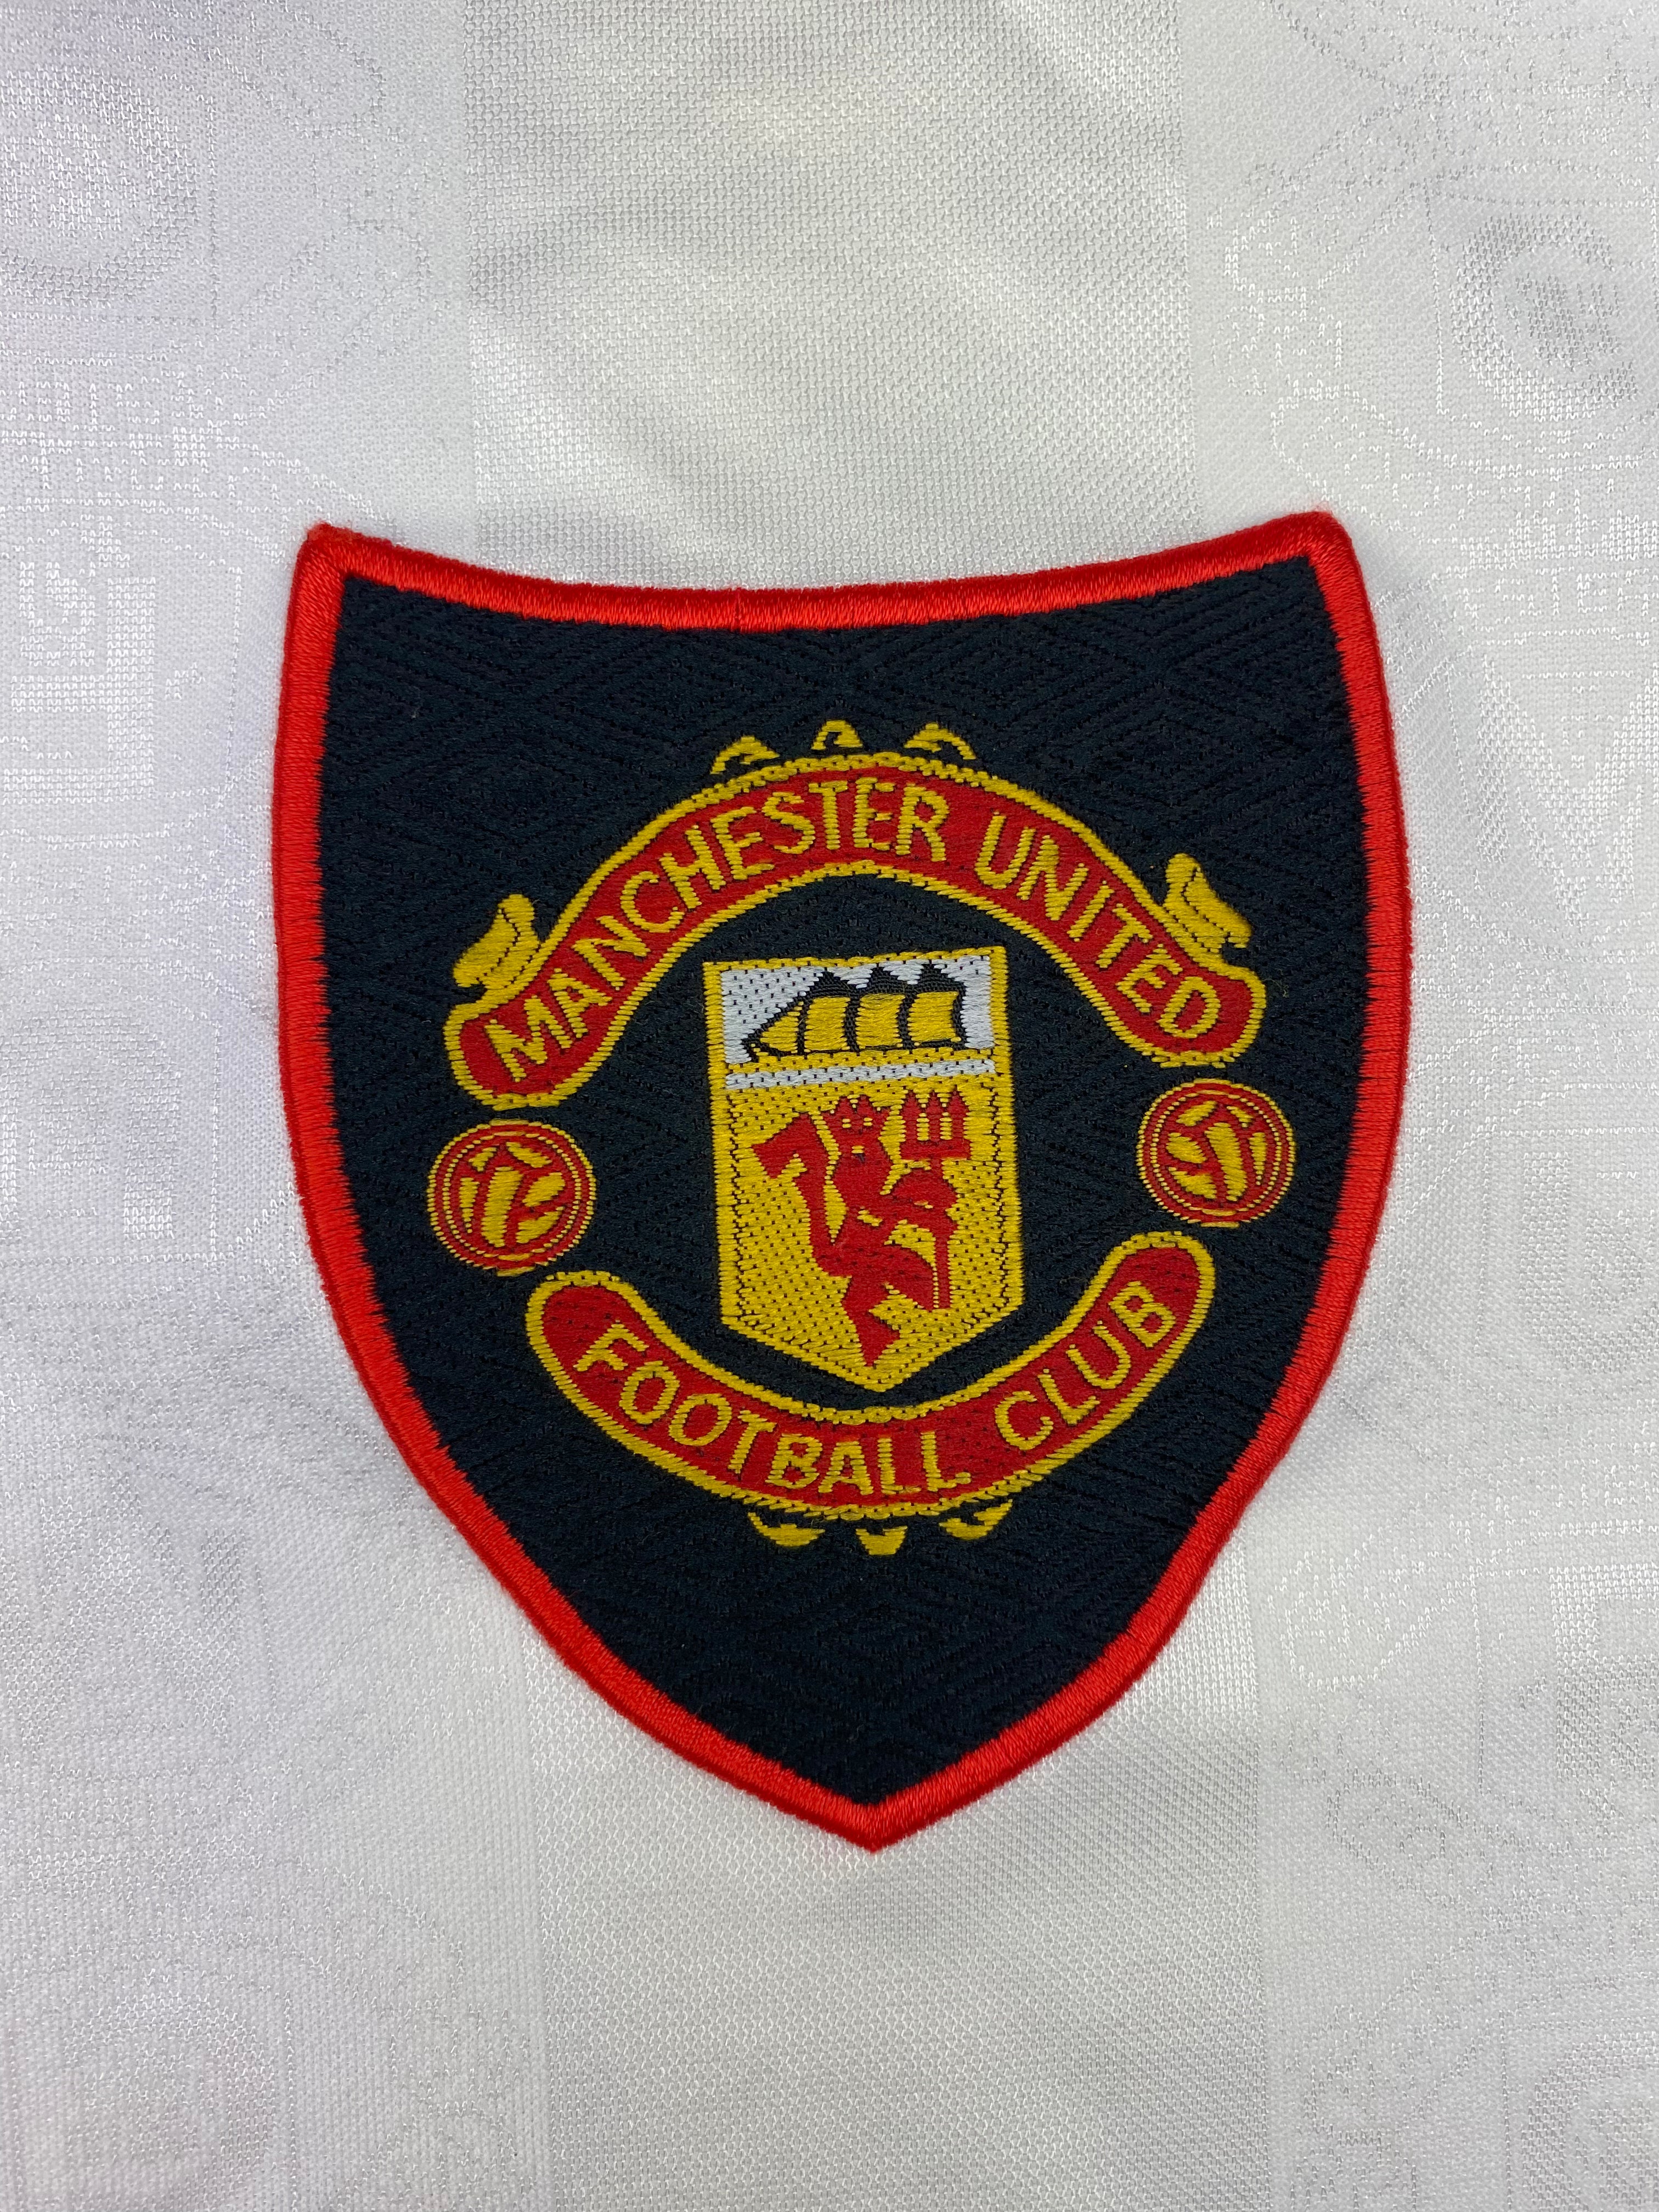 1997/99 Manchester United Away Shirt Giggs #11 (XL) 9/10